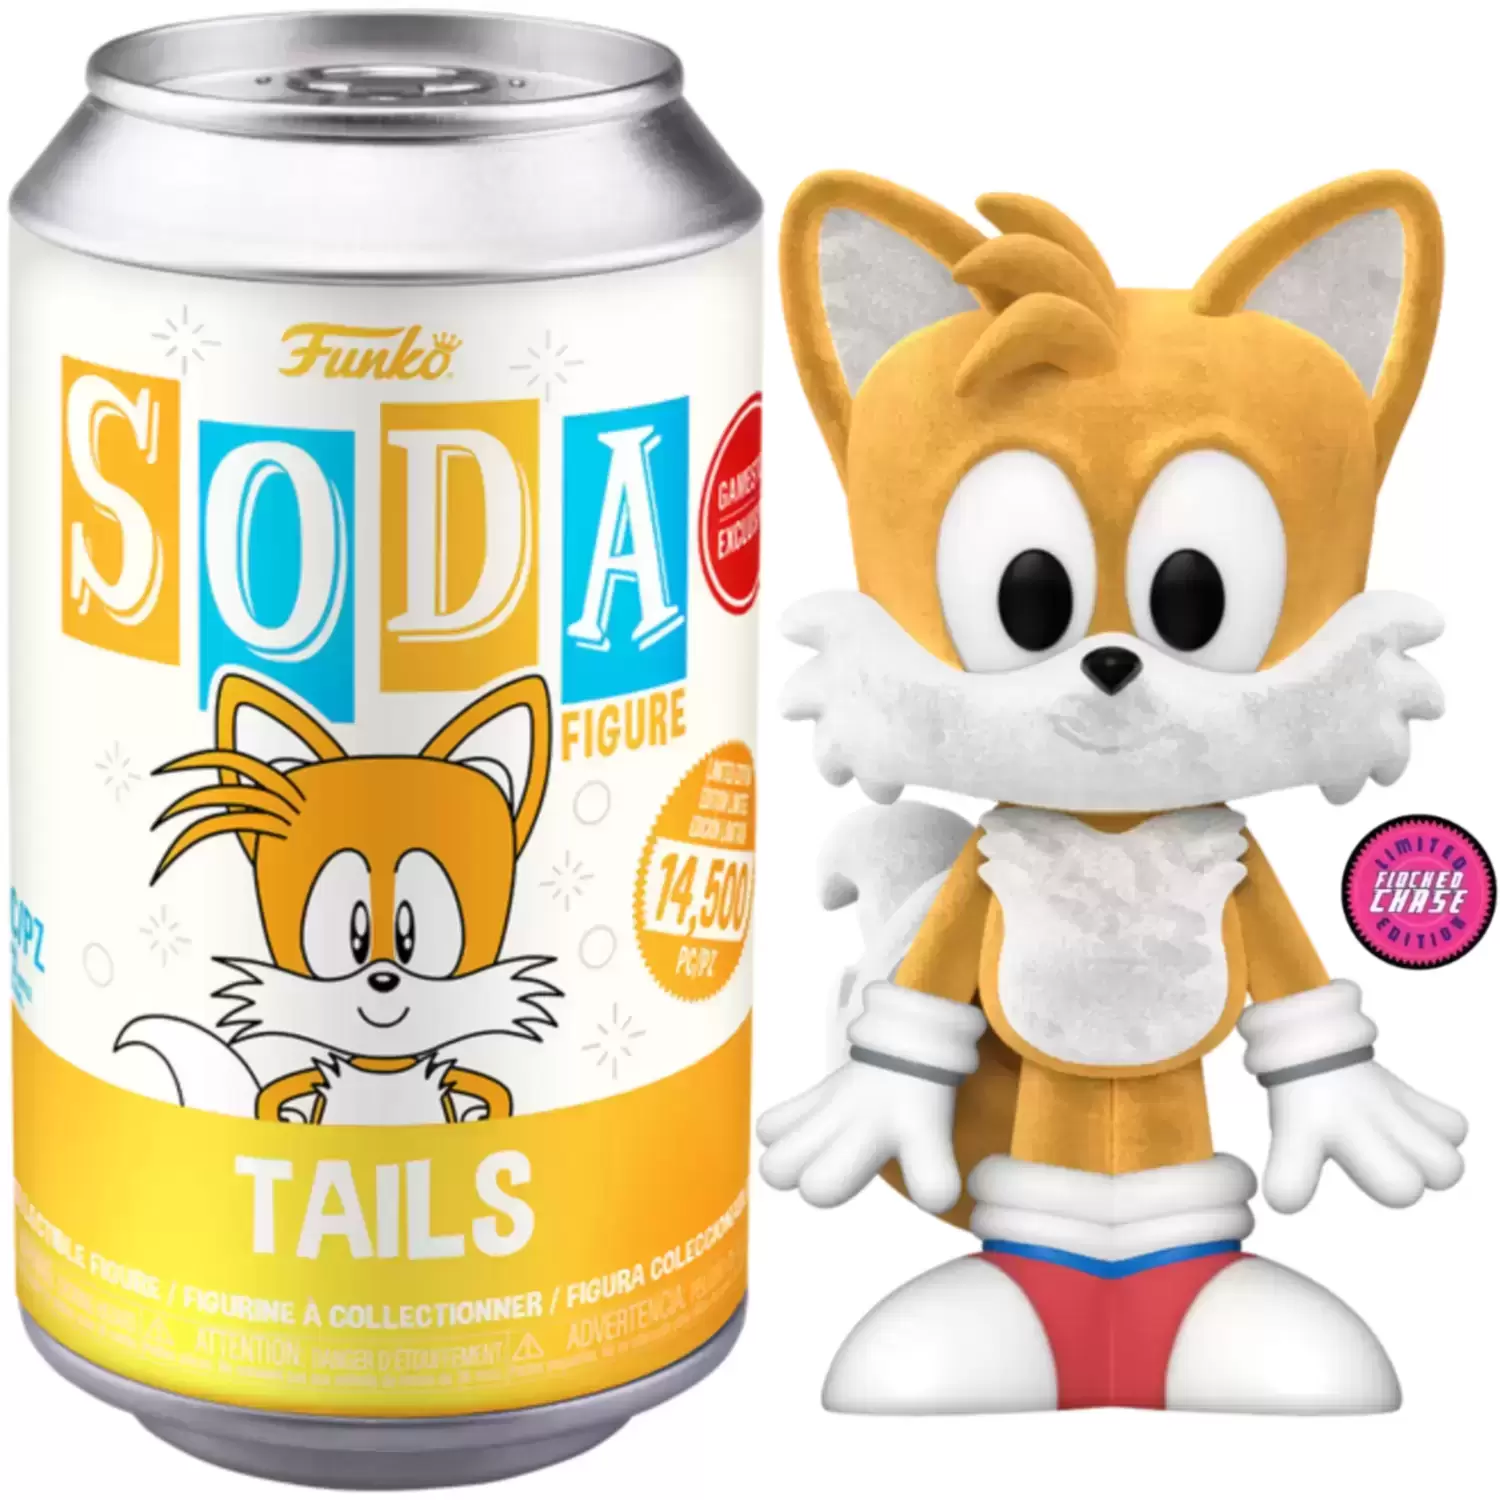 Vinyl Soda! - Sonic the Hedgehog - Tails Flocked